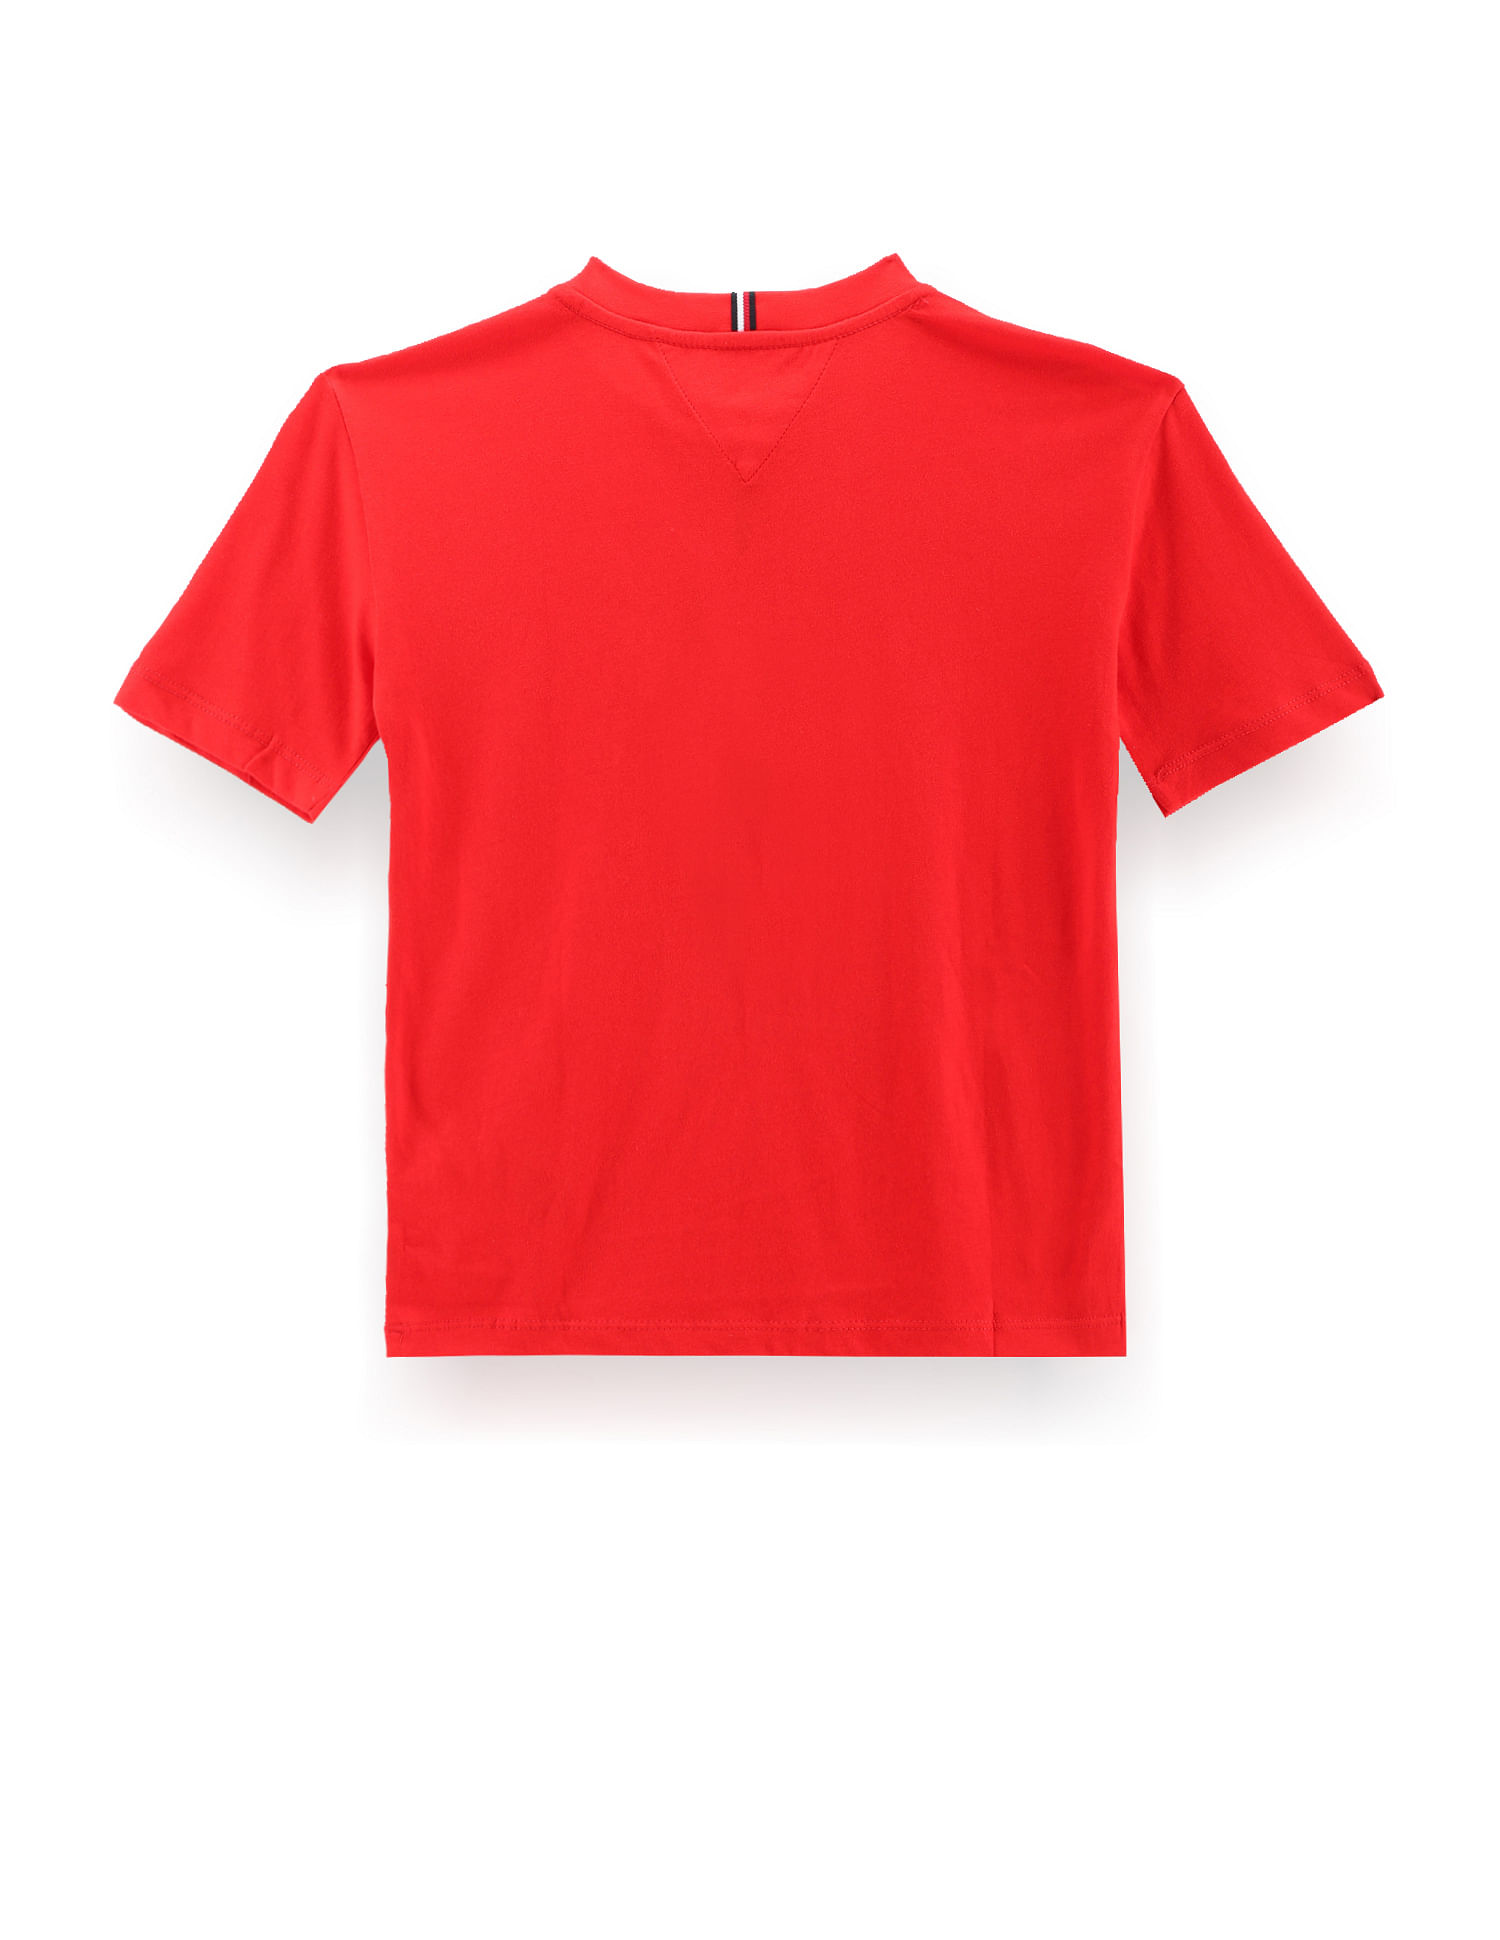 Buy Essential Hilfiger Solid T-Shirt Tommy Boys Kids